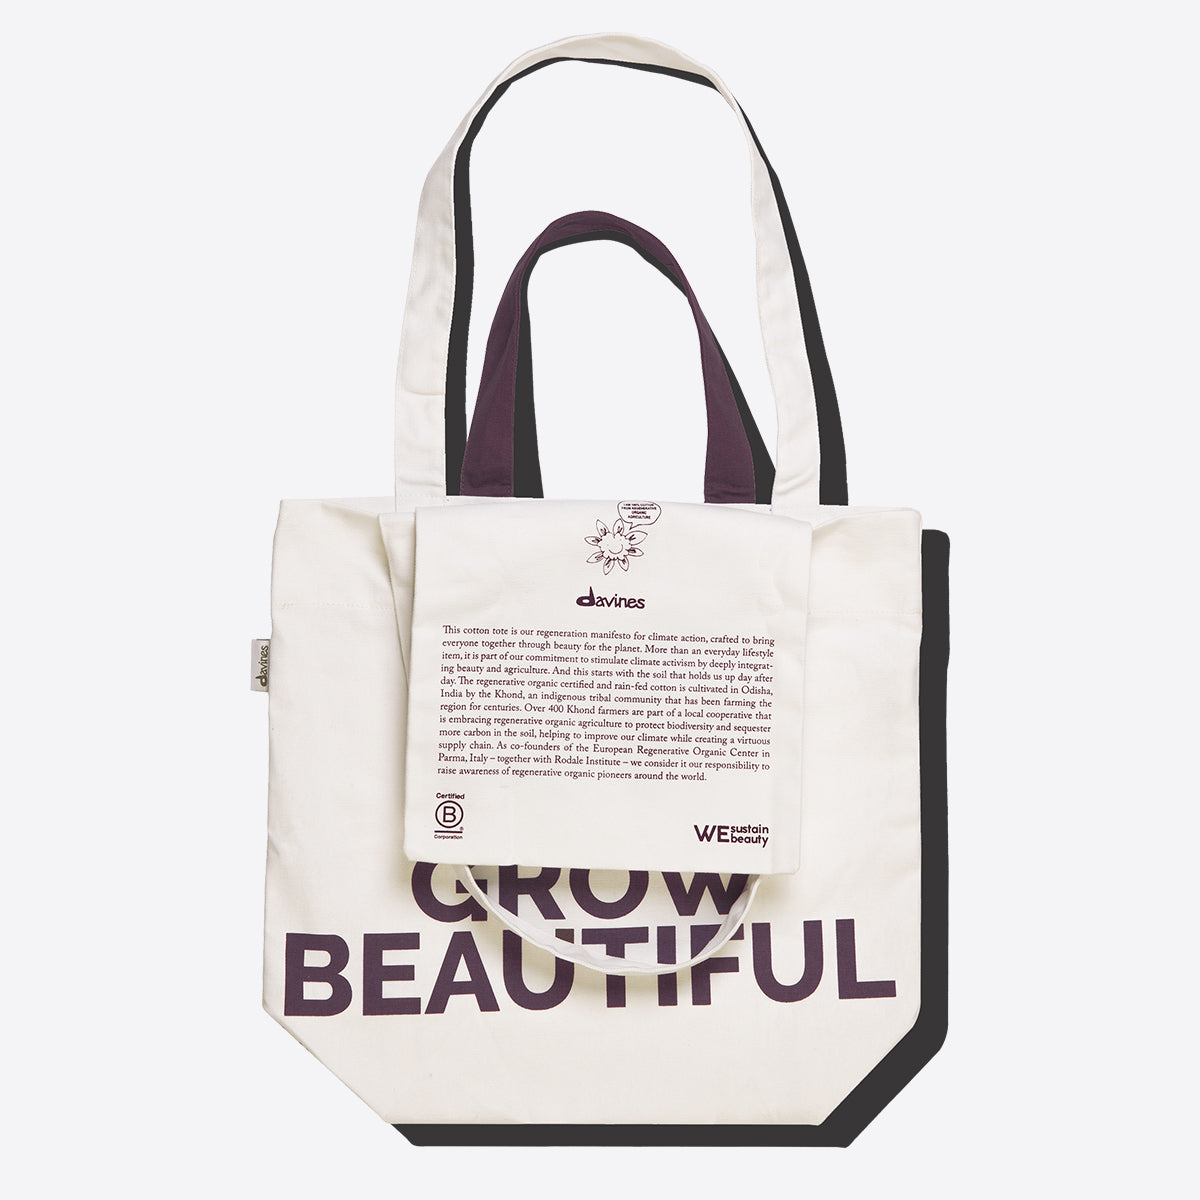 The Beauty Bag